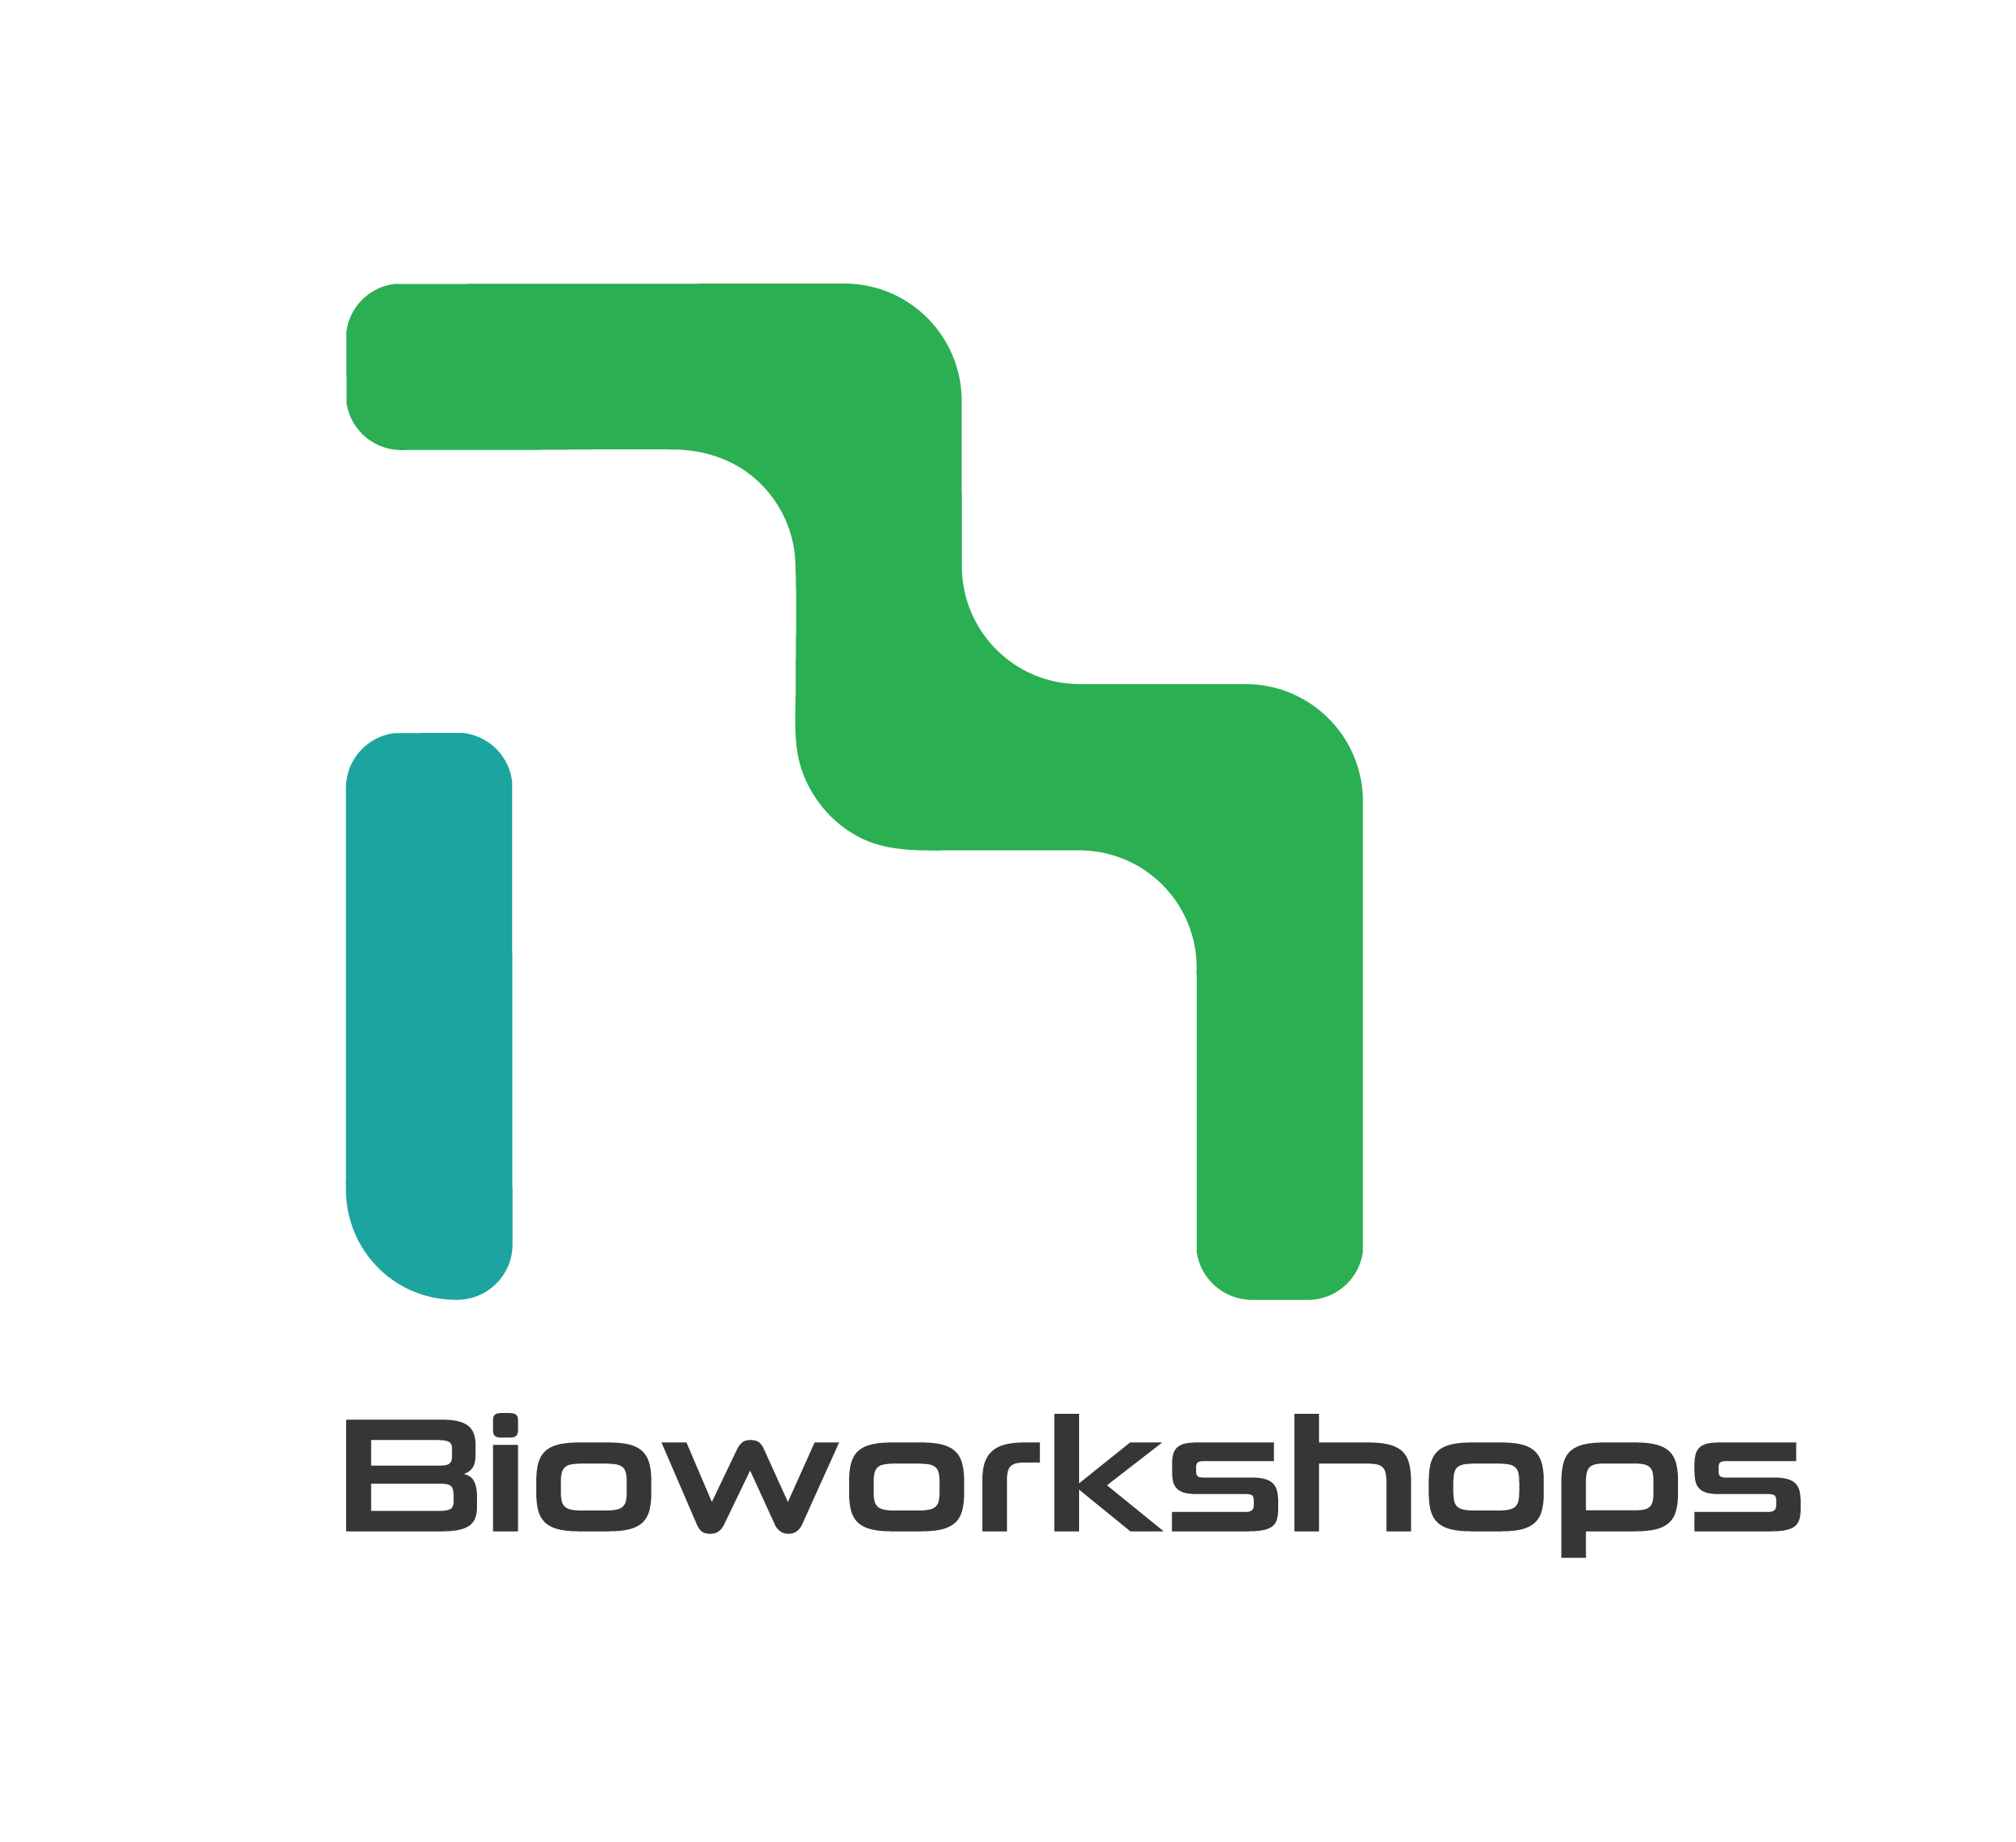 Bioworkshops